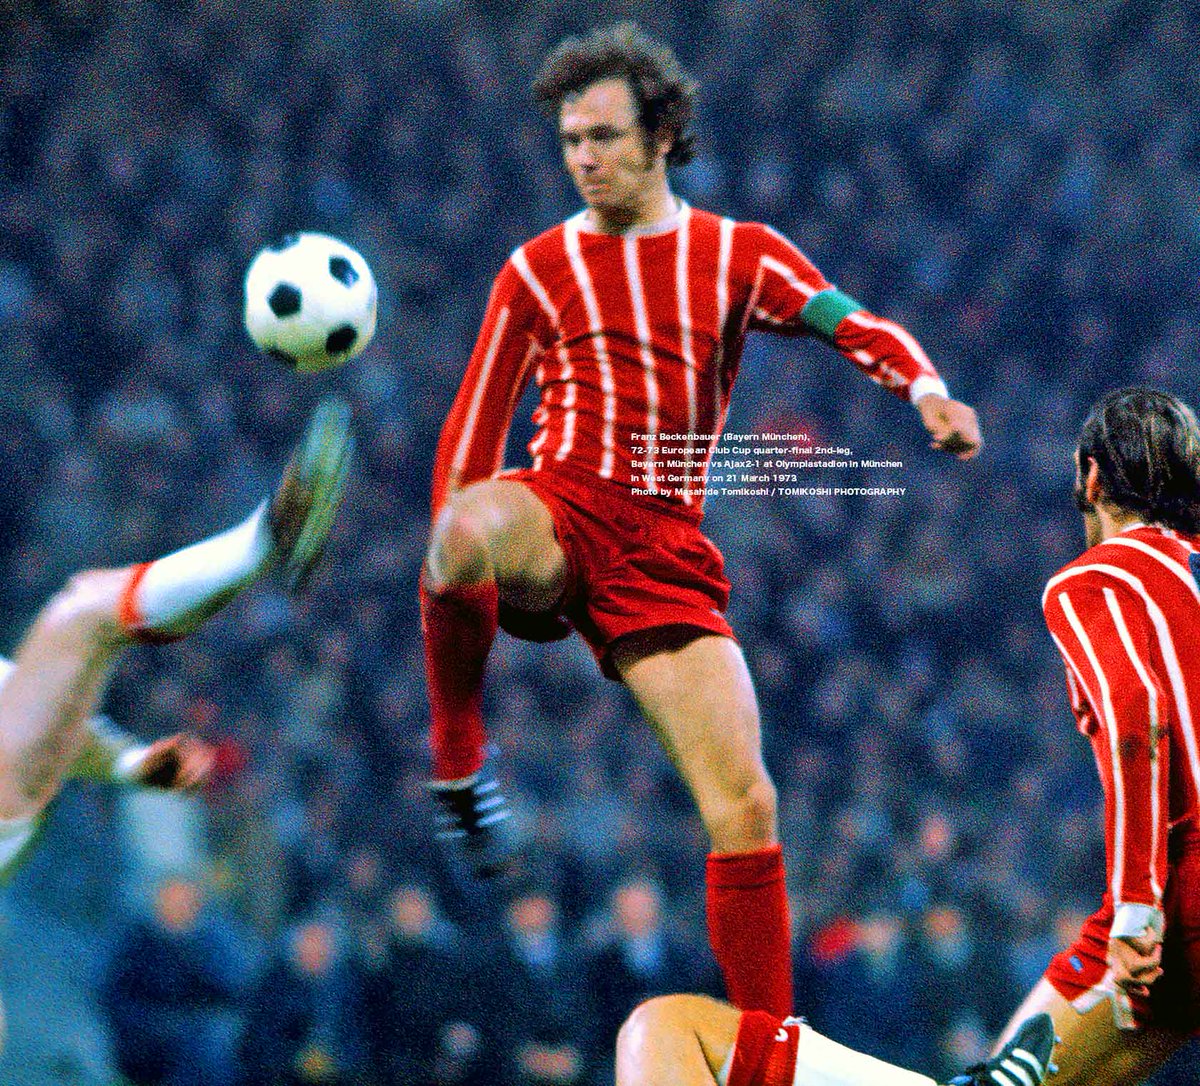 Franz Beckenbauer (Bayern München) jump 72-73 European Club Cup quarter-final 2nd-leg, Bayern München vs Ajax2-1 at Olympiastadion in München in West Germany on 21 March 1973 Photo by Masahide Tomikoshi / TOMIKOSHI PHOTOGRAPHY